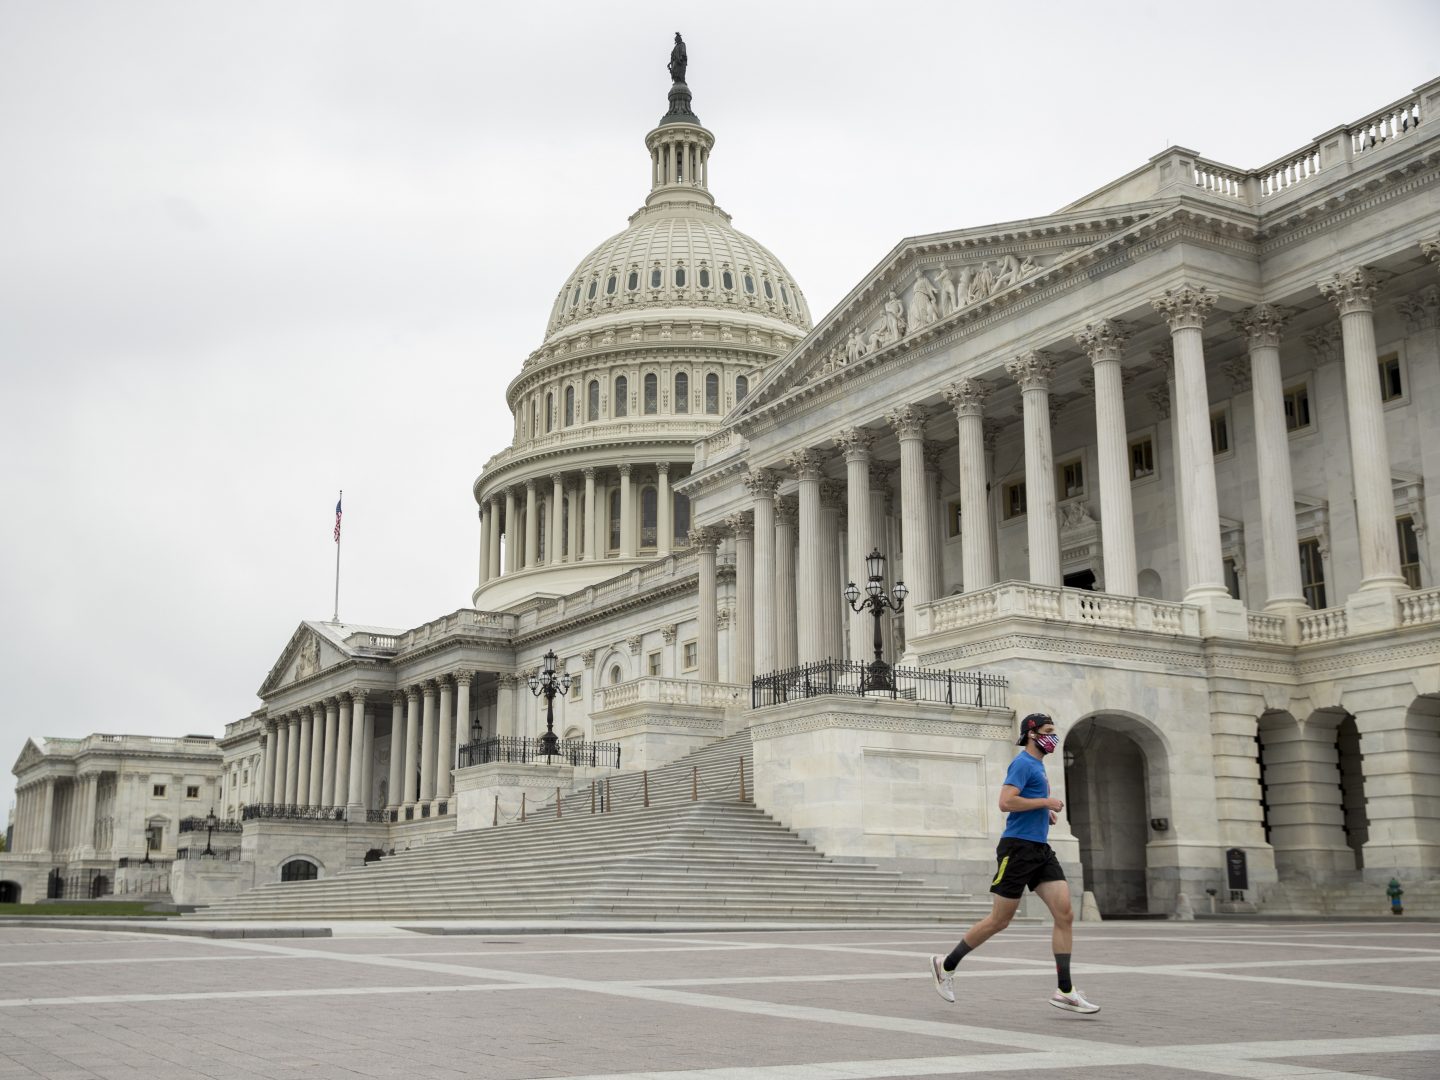 FILE PHOTO: The U.S. Senate building in Washington, D.C.